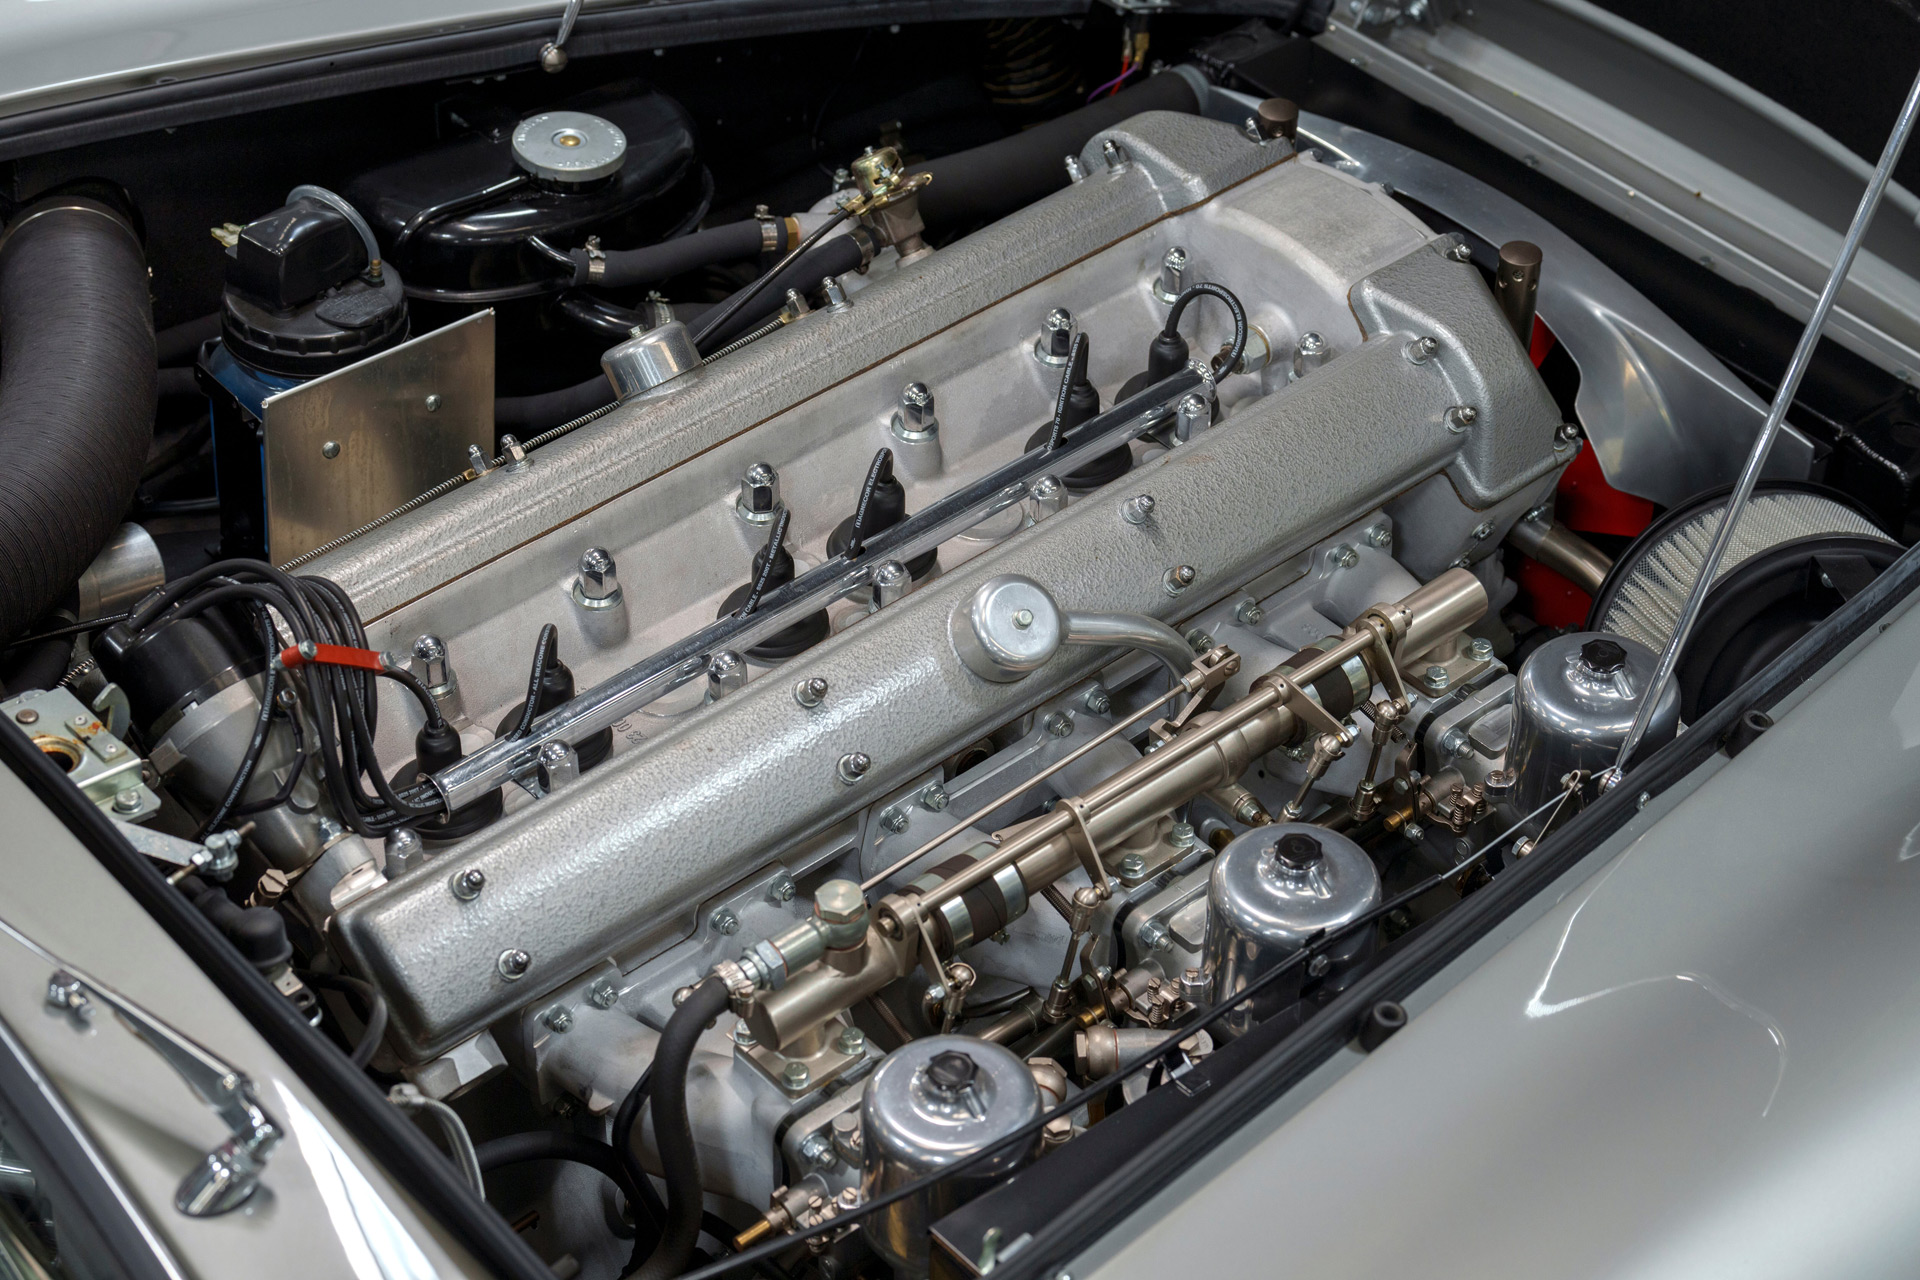 Aston Martin Provides Updated Aston Martin Engines for Vintage Models